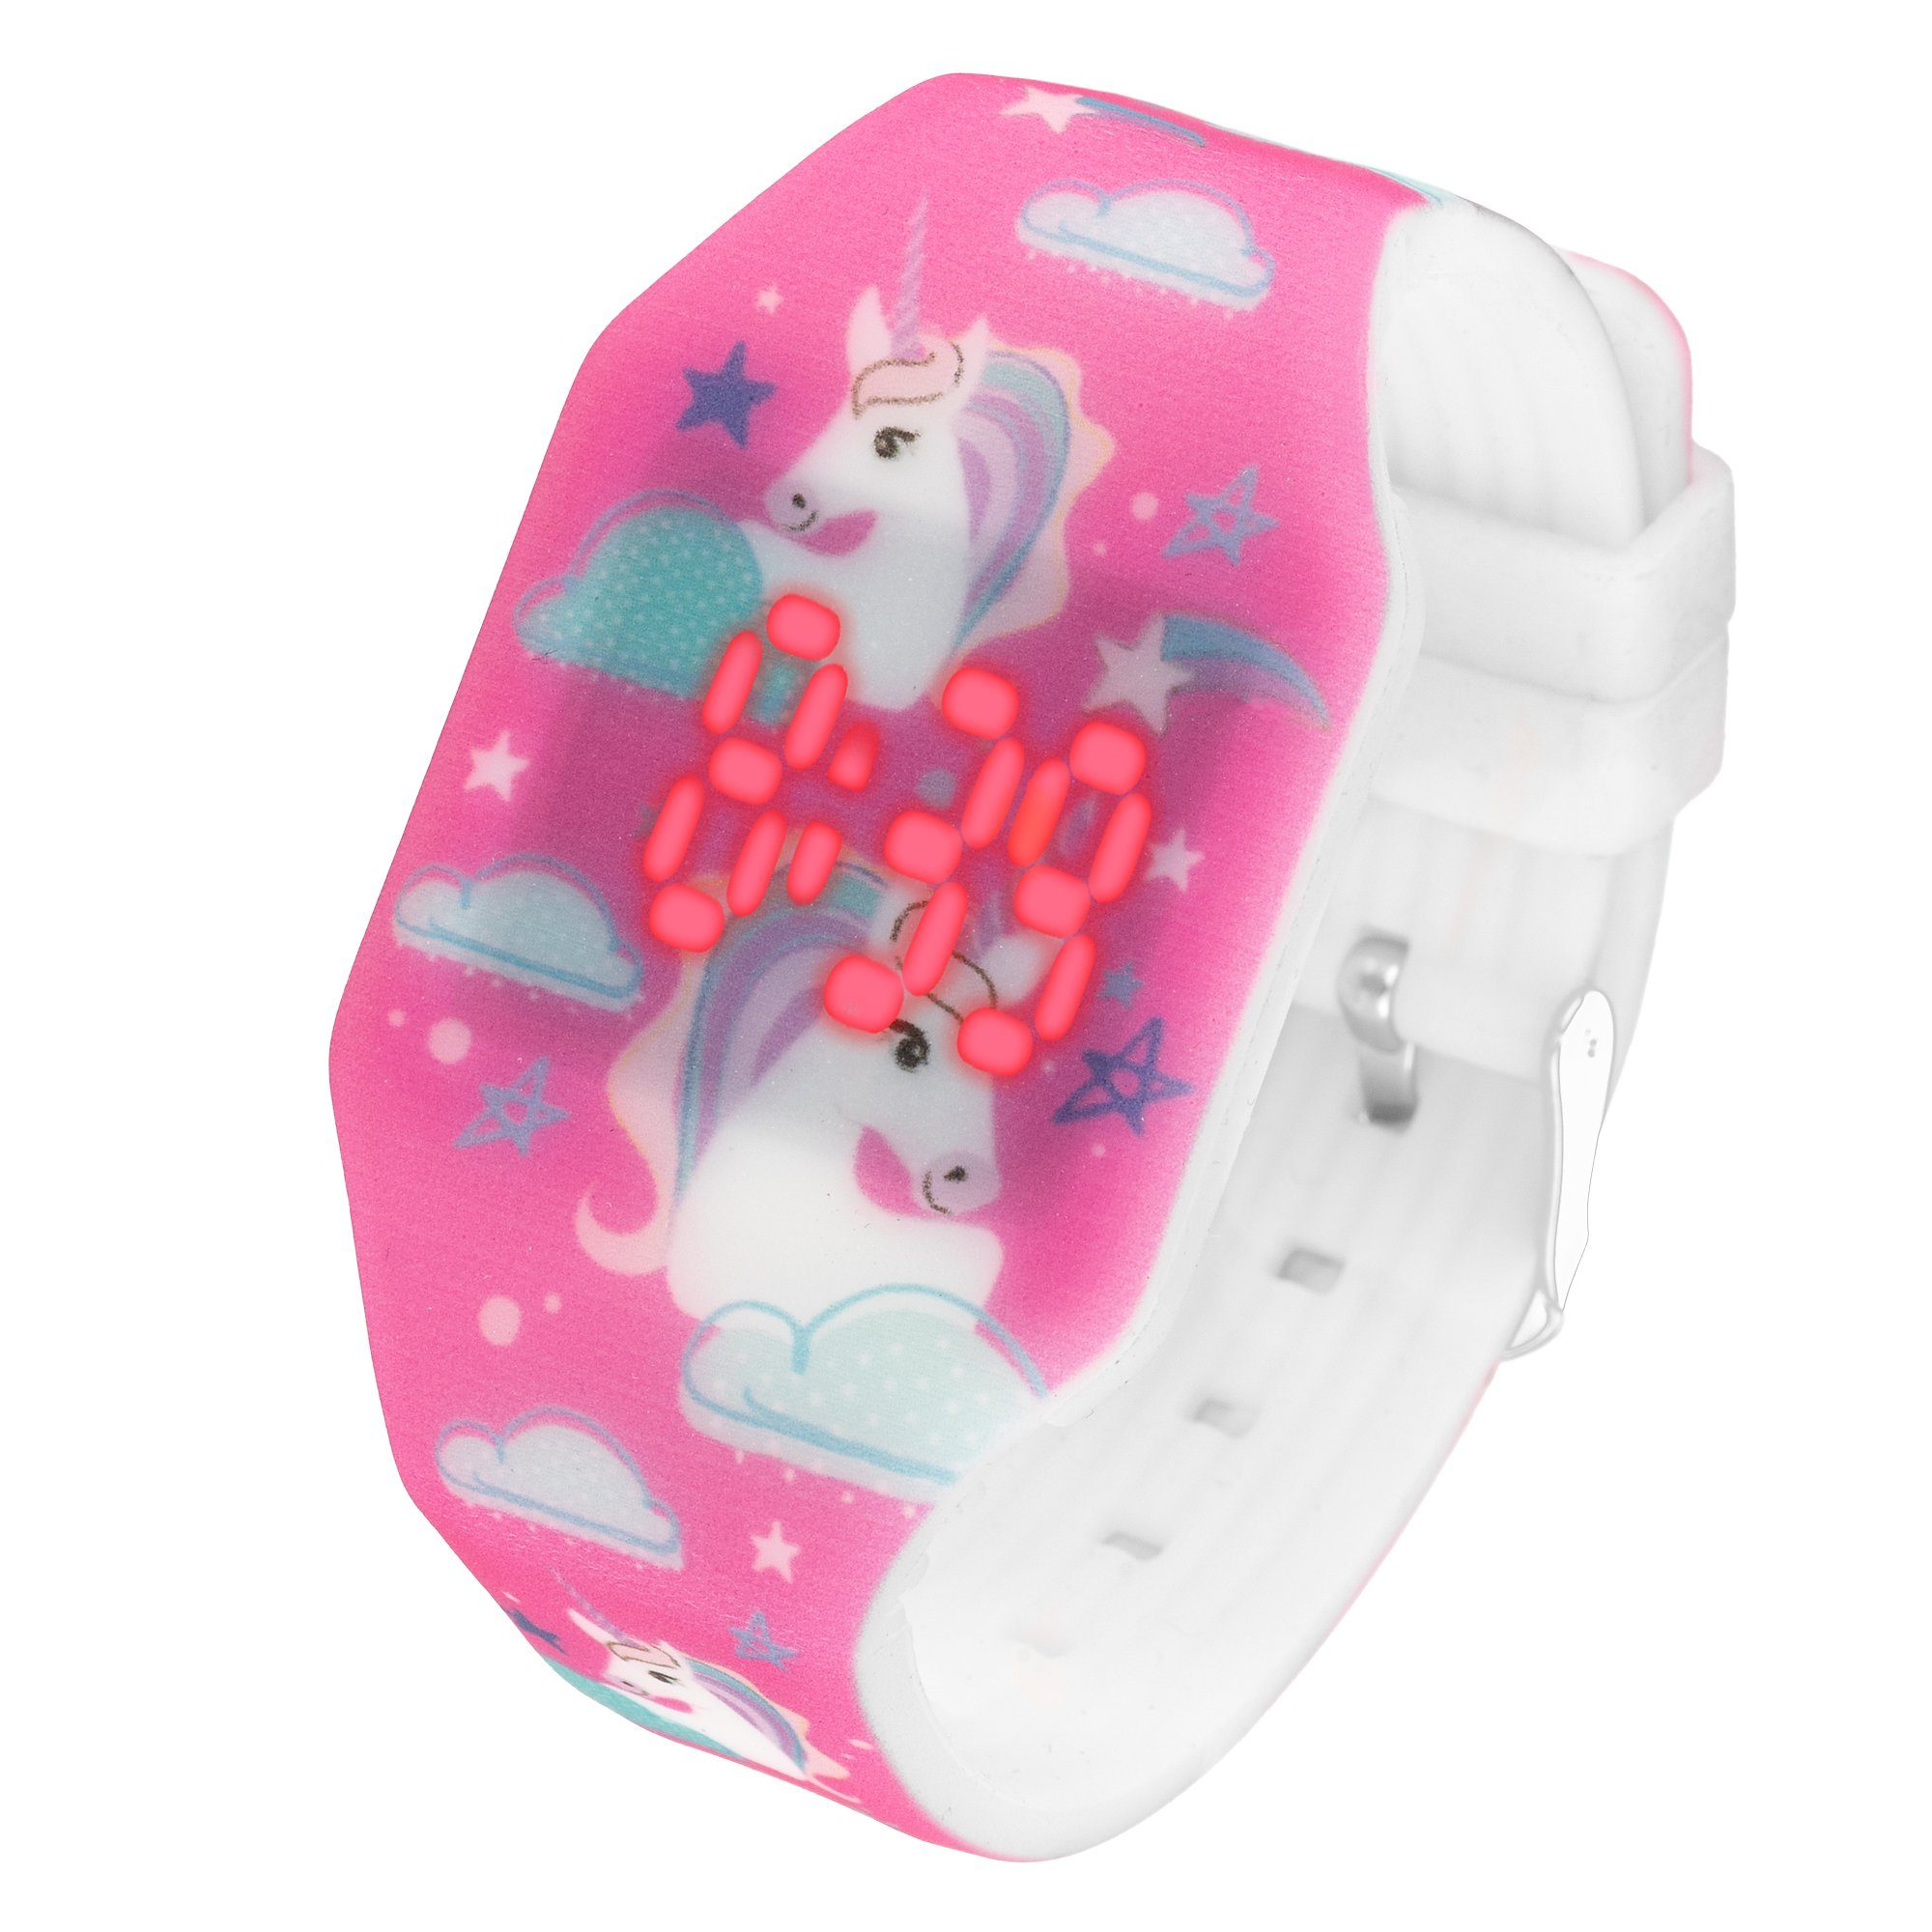 Taffstyle Quarzuhr Kinder Armbanduhr Silikon Einhorn Digital LED Uhr, Mädchen Fluoreszierend Sportuhr Kinderuhr Lernuhr Bunt Regenbogen pink | Quarzuhren